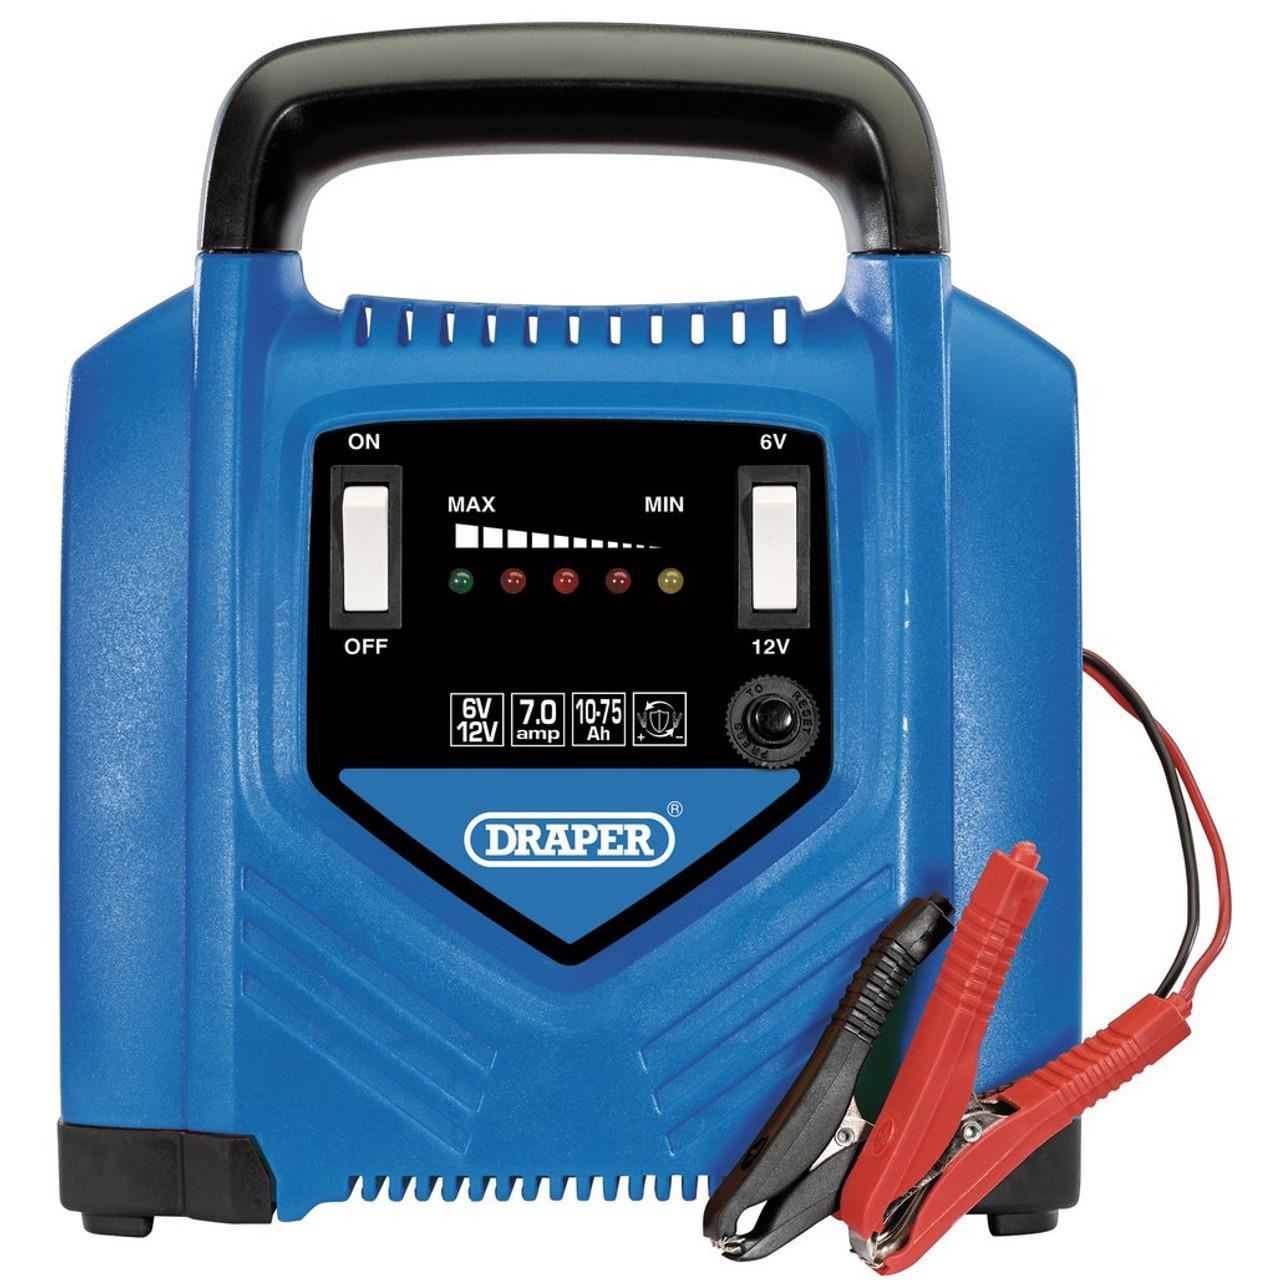 Draper 6V/12V Battery Charger, 7.0A, 10-75Ah, Blue and Black 53164 - Tools 2U Direct SW